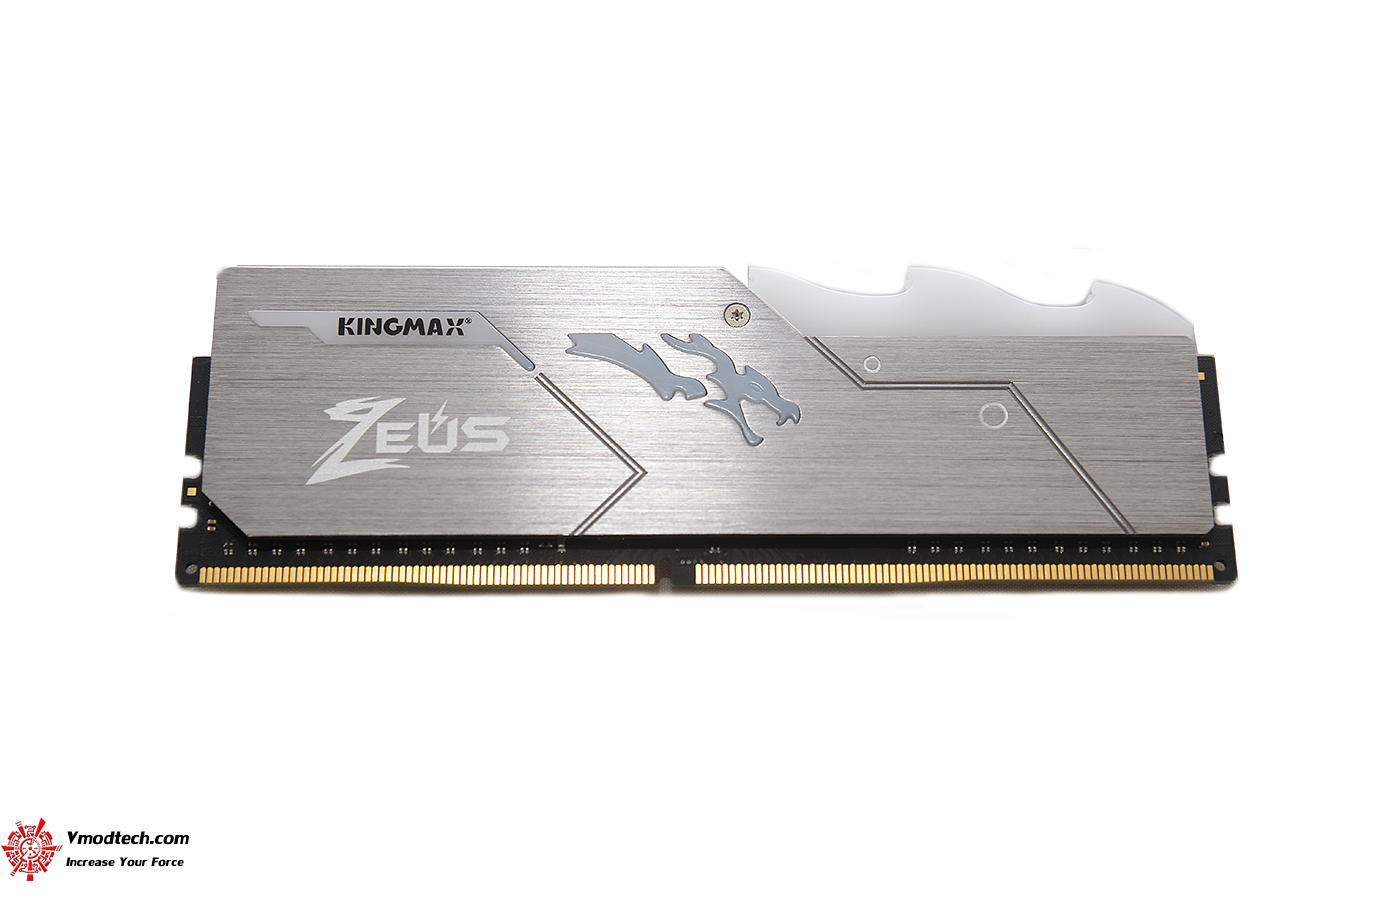 dsc 5411 Kingmax Zeus Dragon DDR4 RGB GAMING RAM 3200Mhz Review